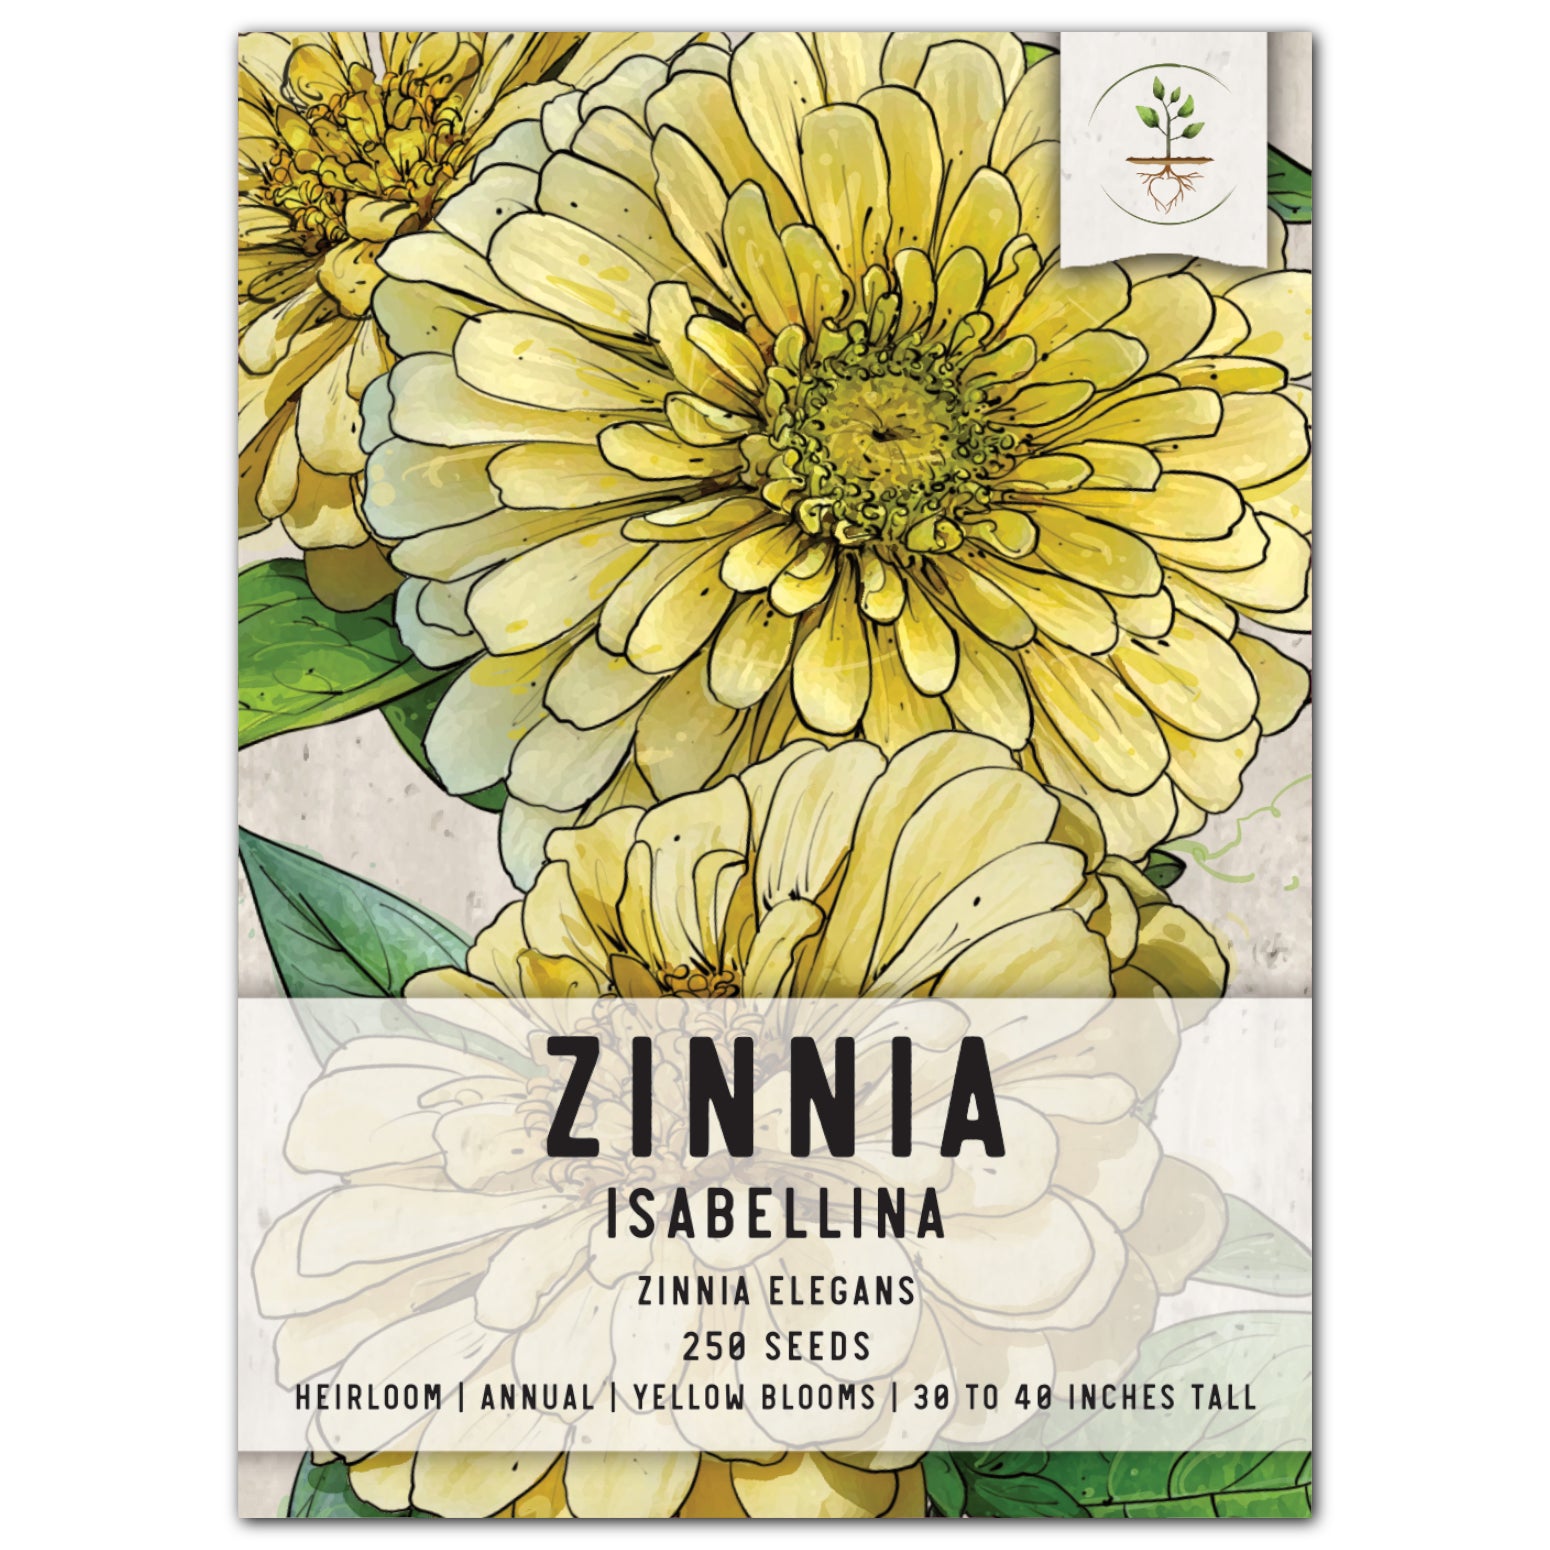 Isabellina Zinnia Seeds For Planting (Zinnia elegans)